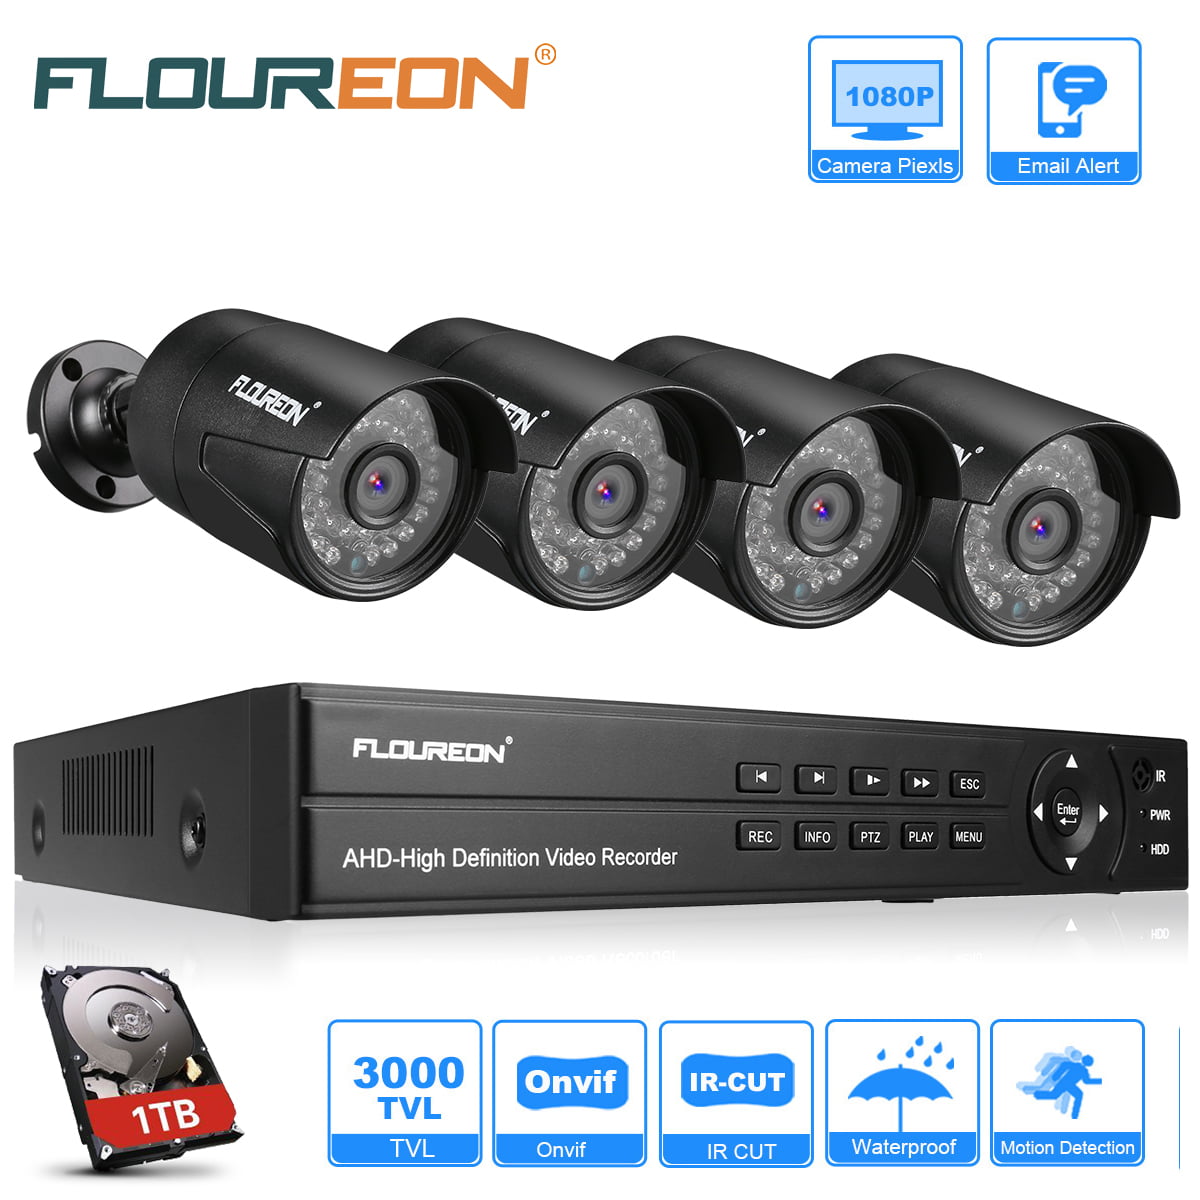 FLOUREON 1TB HDD 8CH 1080N AHD DVR 3000TVL 1080P HD Video Camera Security System 